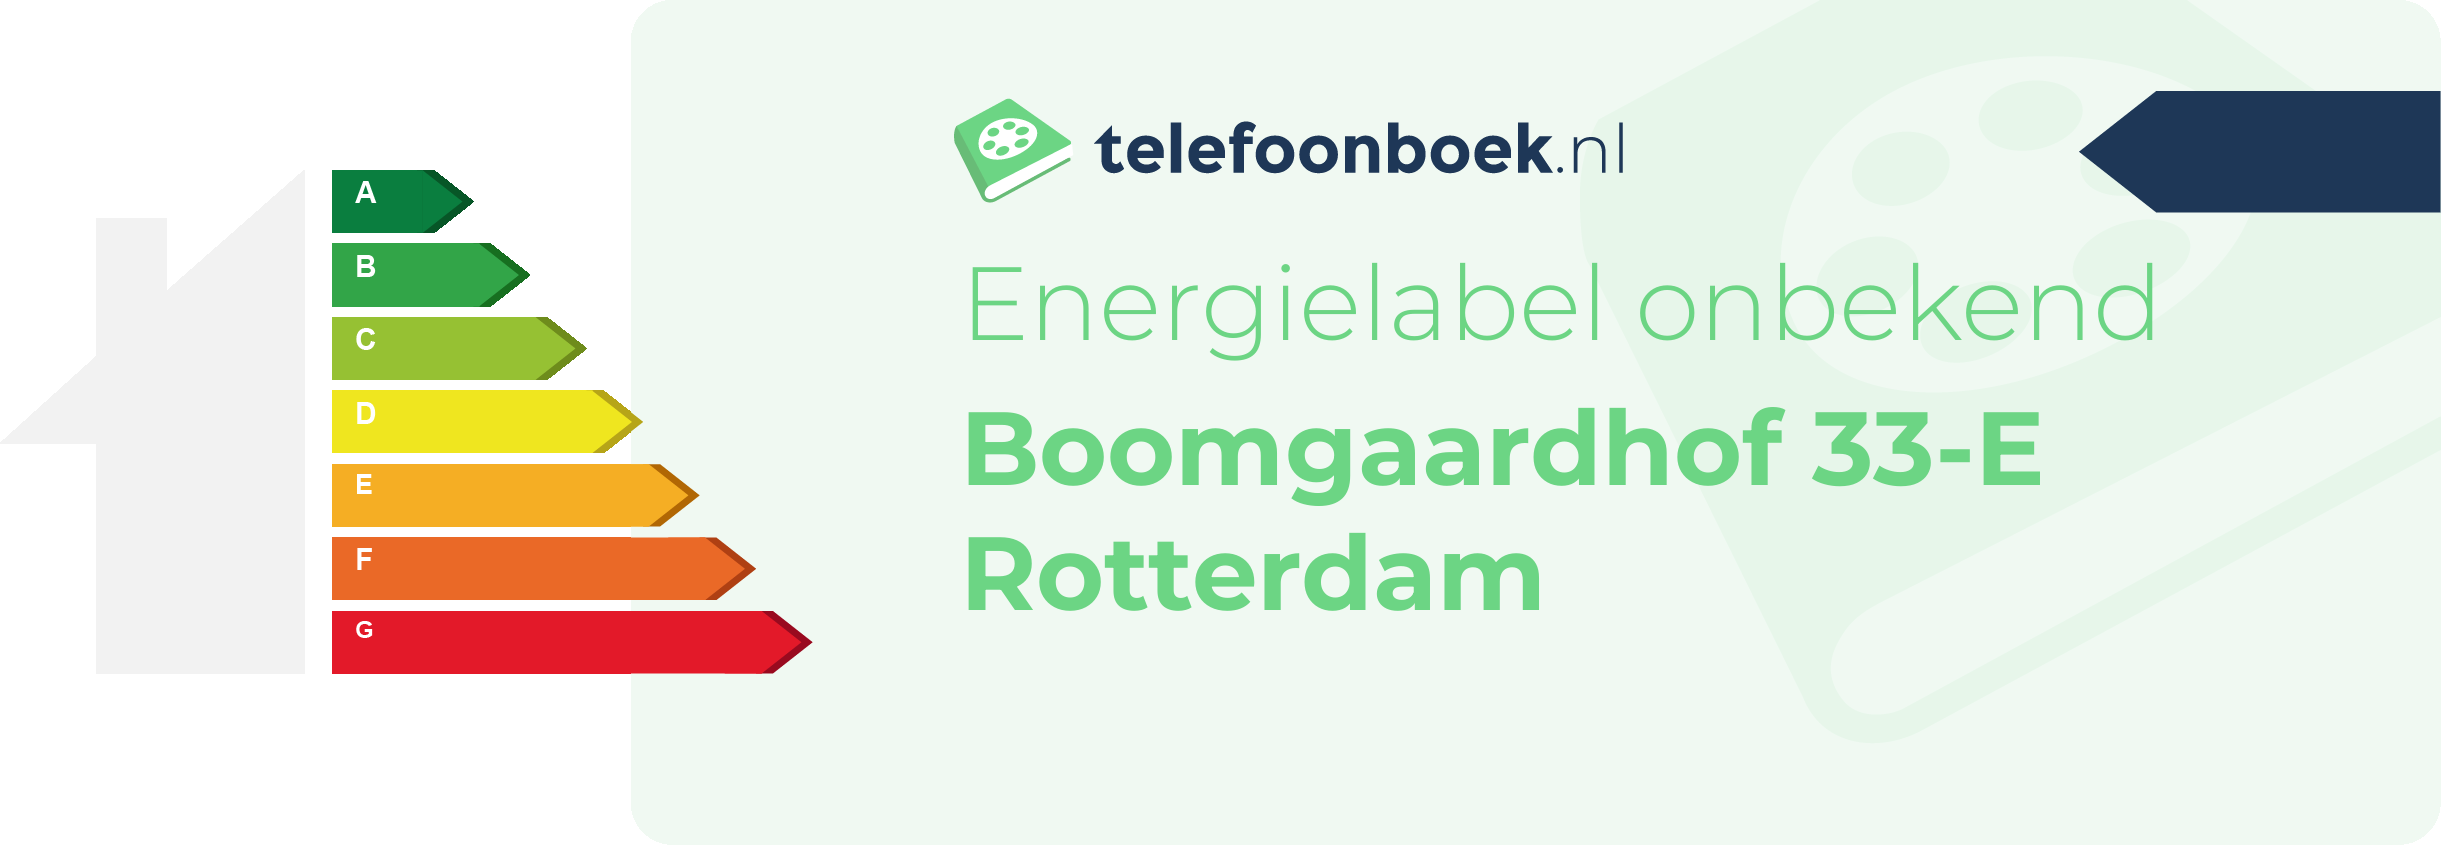 Energielabel Boomgaardhof 33-E Rotterdam